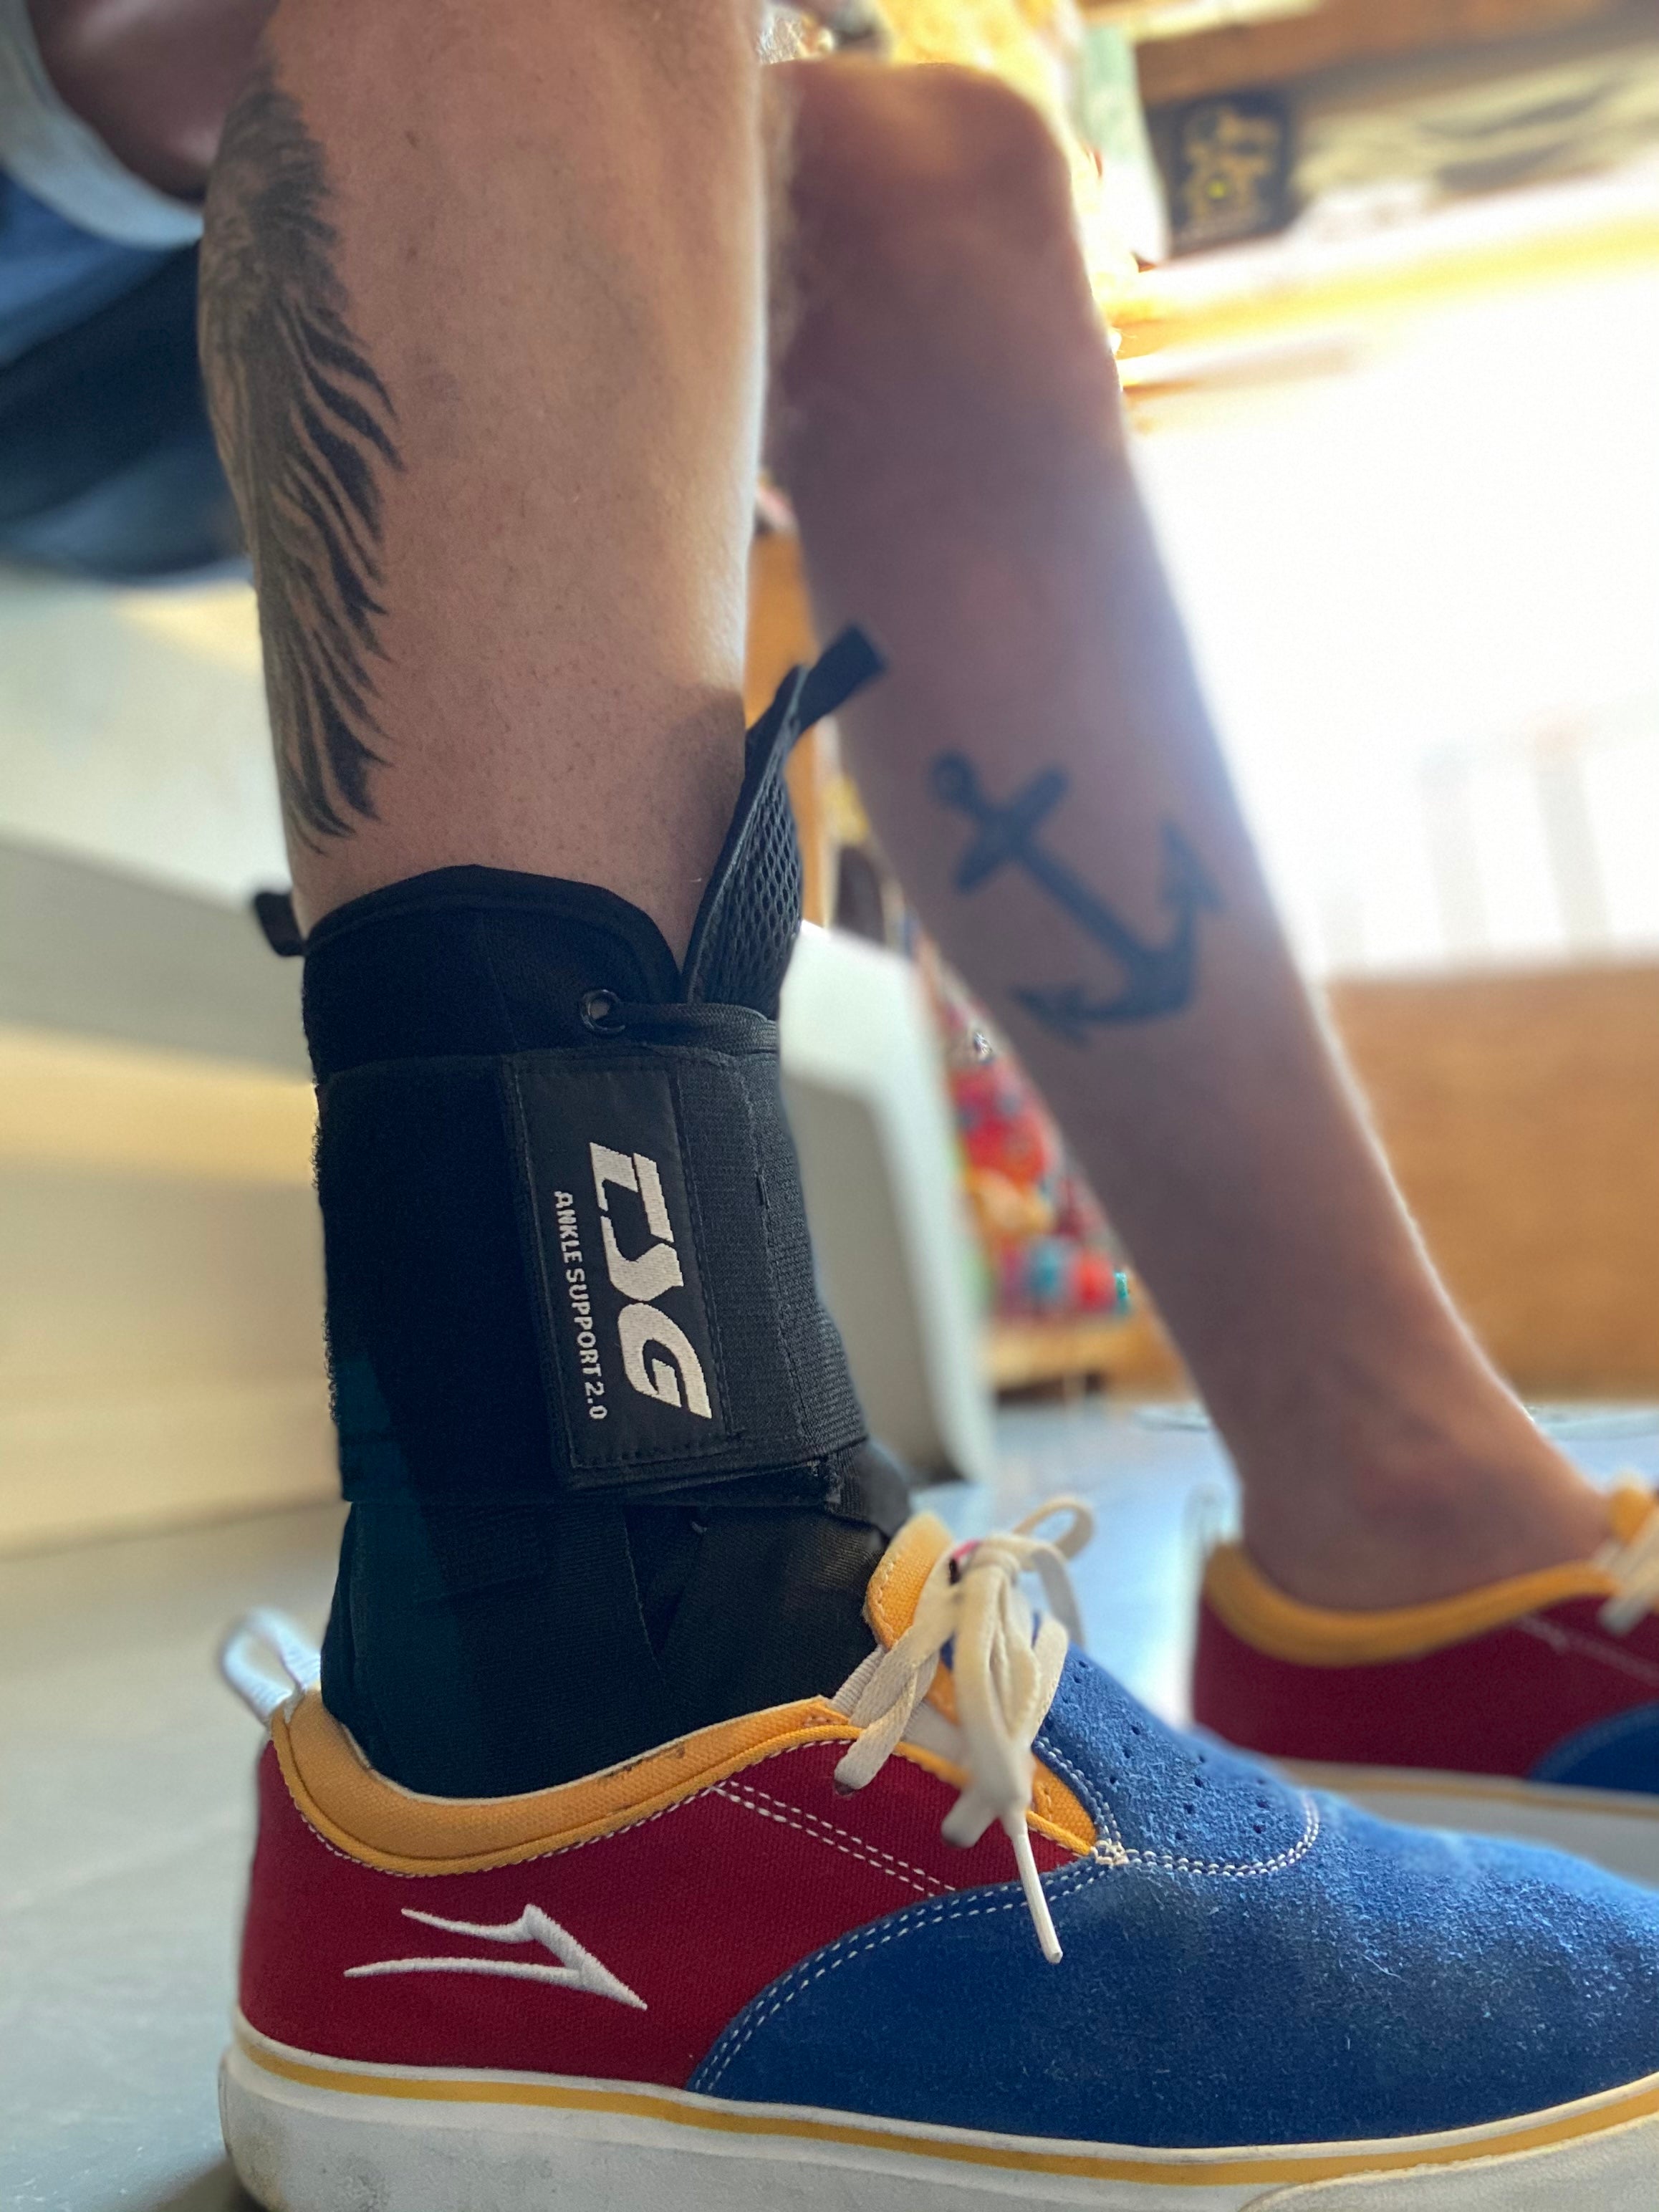 TSG Ankle Support 2.0 Brace